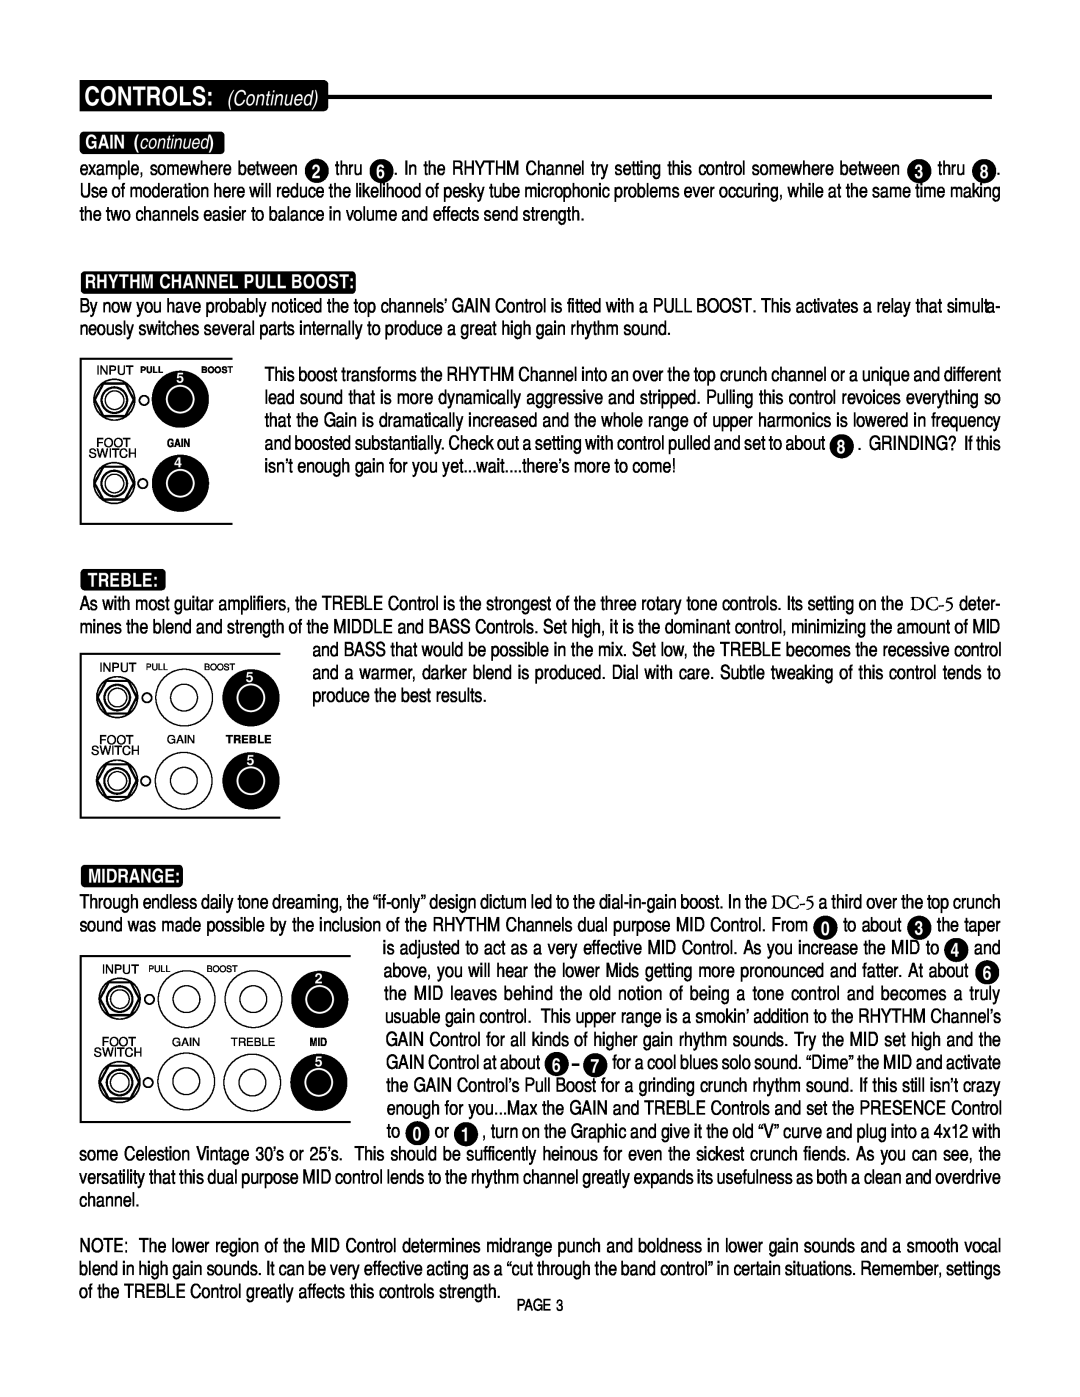 Mesa/Boogie DC5 manual CONTROLS Continued, GAIN continued, Rhythm Channel Pull Boost, Treble, Midrange 